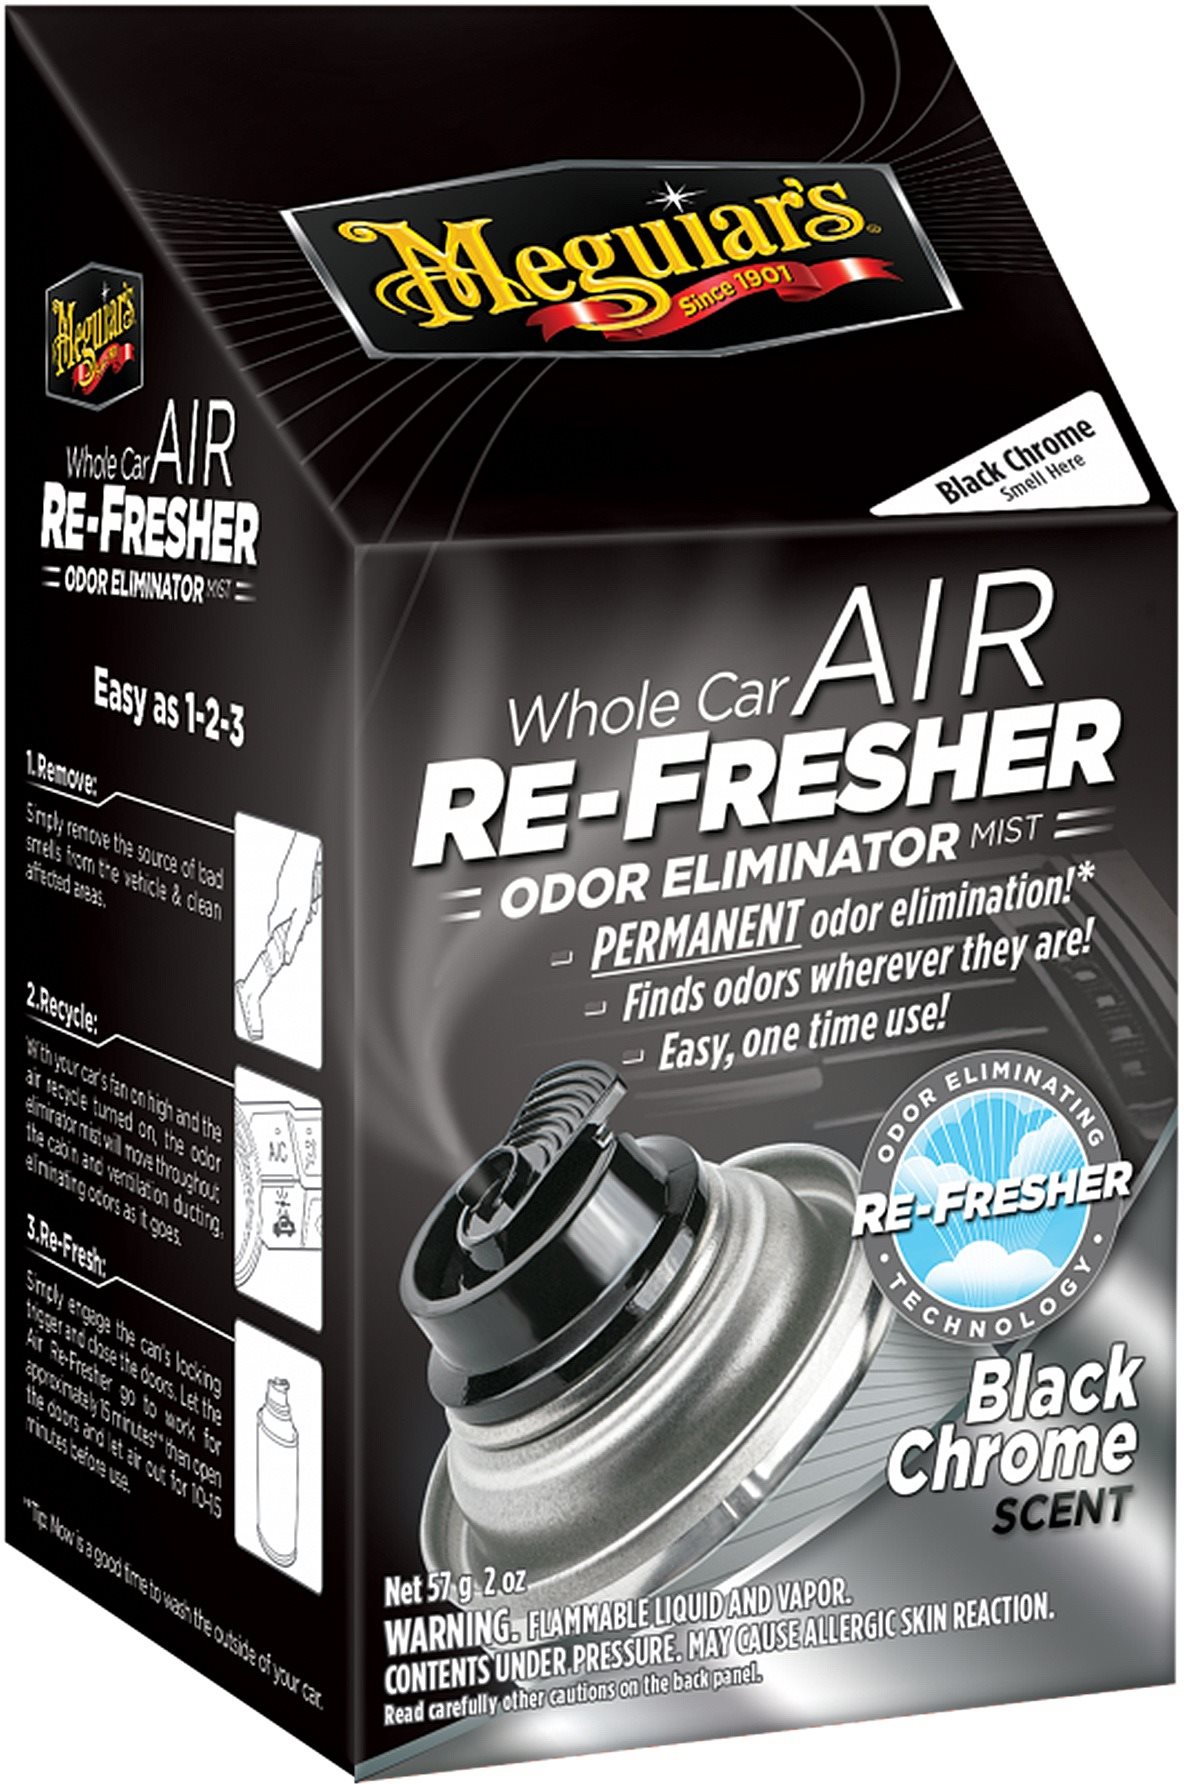 Meguiar's Air Re-Fresher Odor Eliminator - Black Chrome Scent 71g